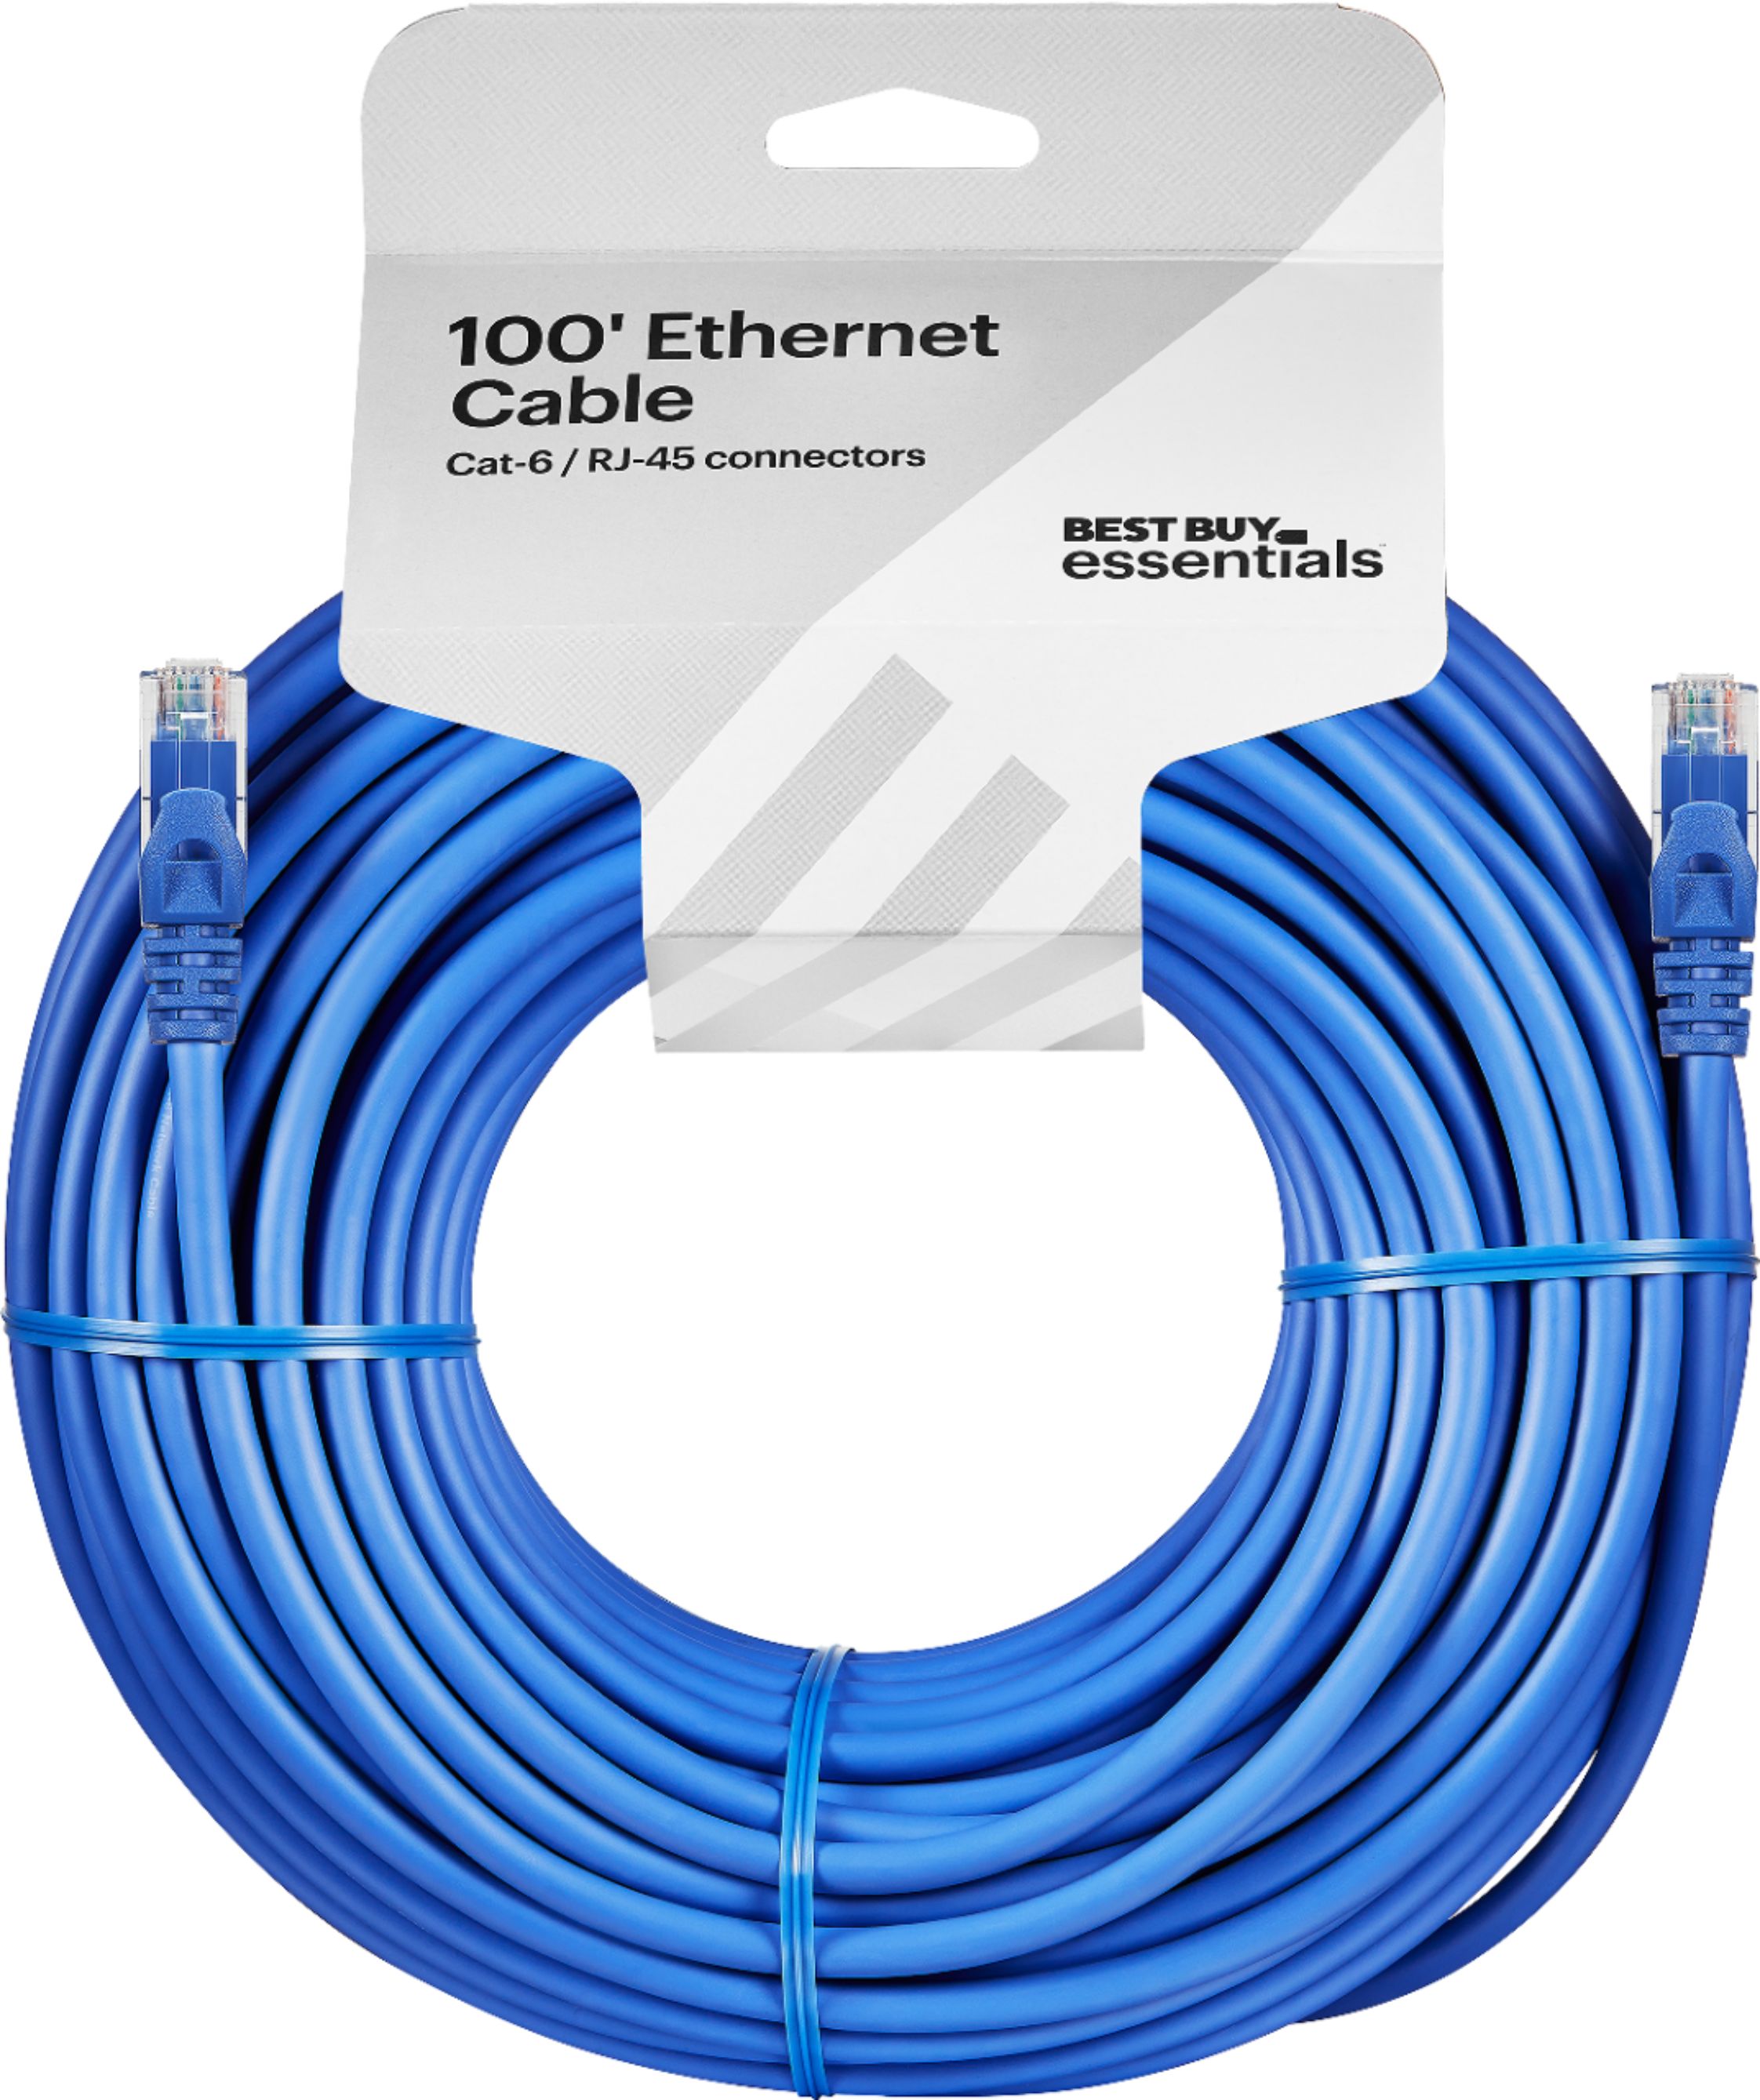 Best Buy Essentials - 100' Cat-6 Ethernet Cable - Blue 6435181